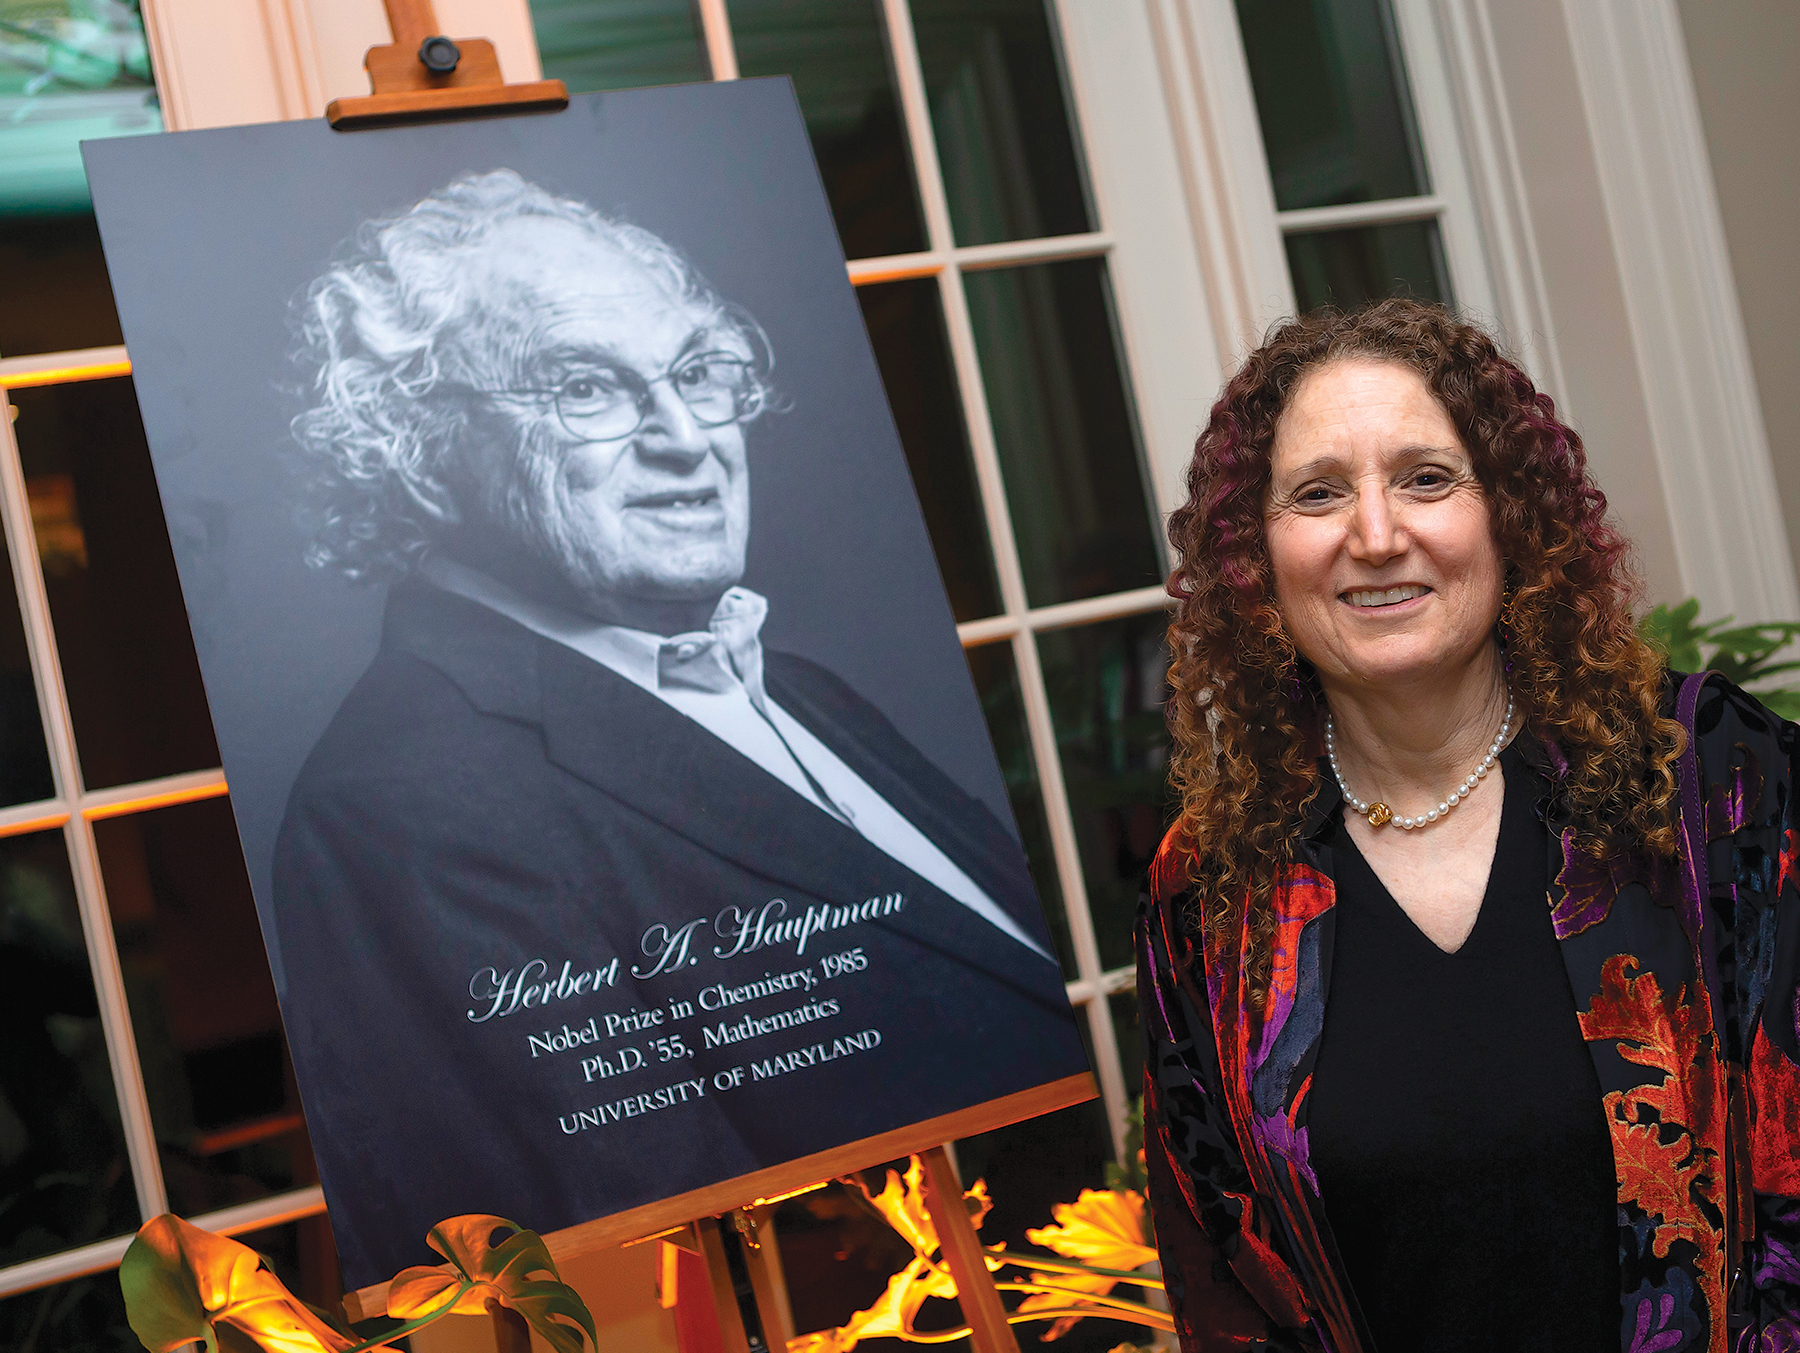 Carol Fullerton with a photo of her father, Nobel laureate Herbert Hauptman (Ph.D. ’55, mathematics). Image credit: John T. Consoli. (Click image to download hi-res version)